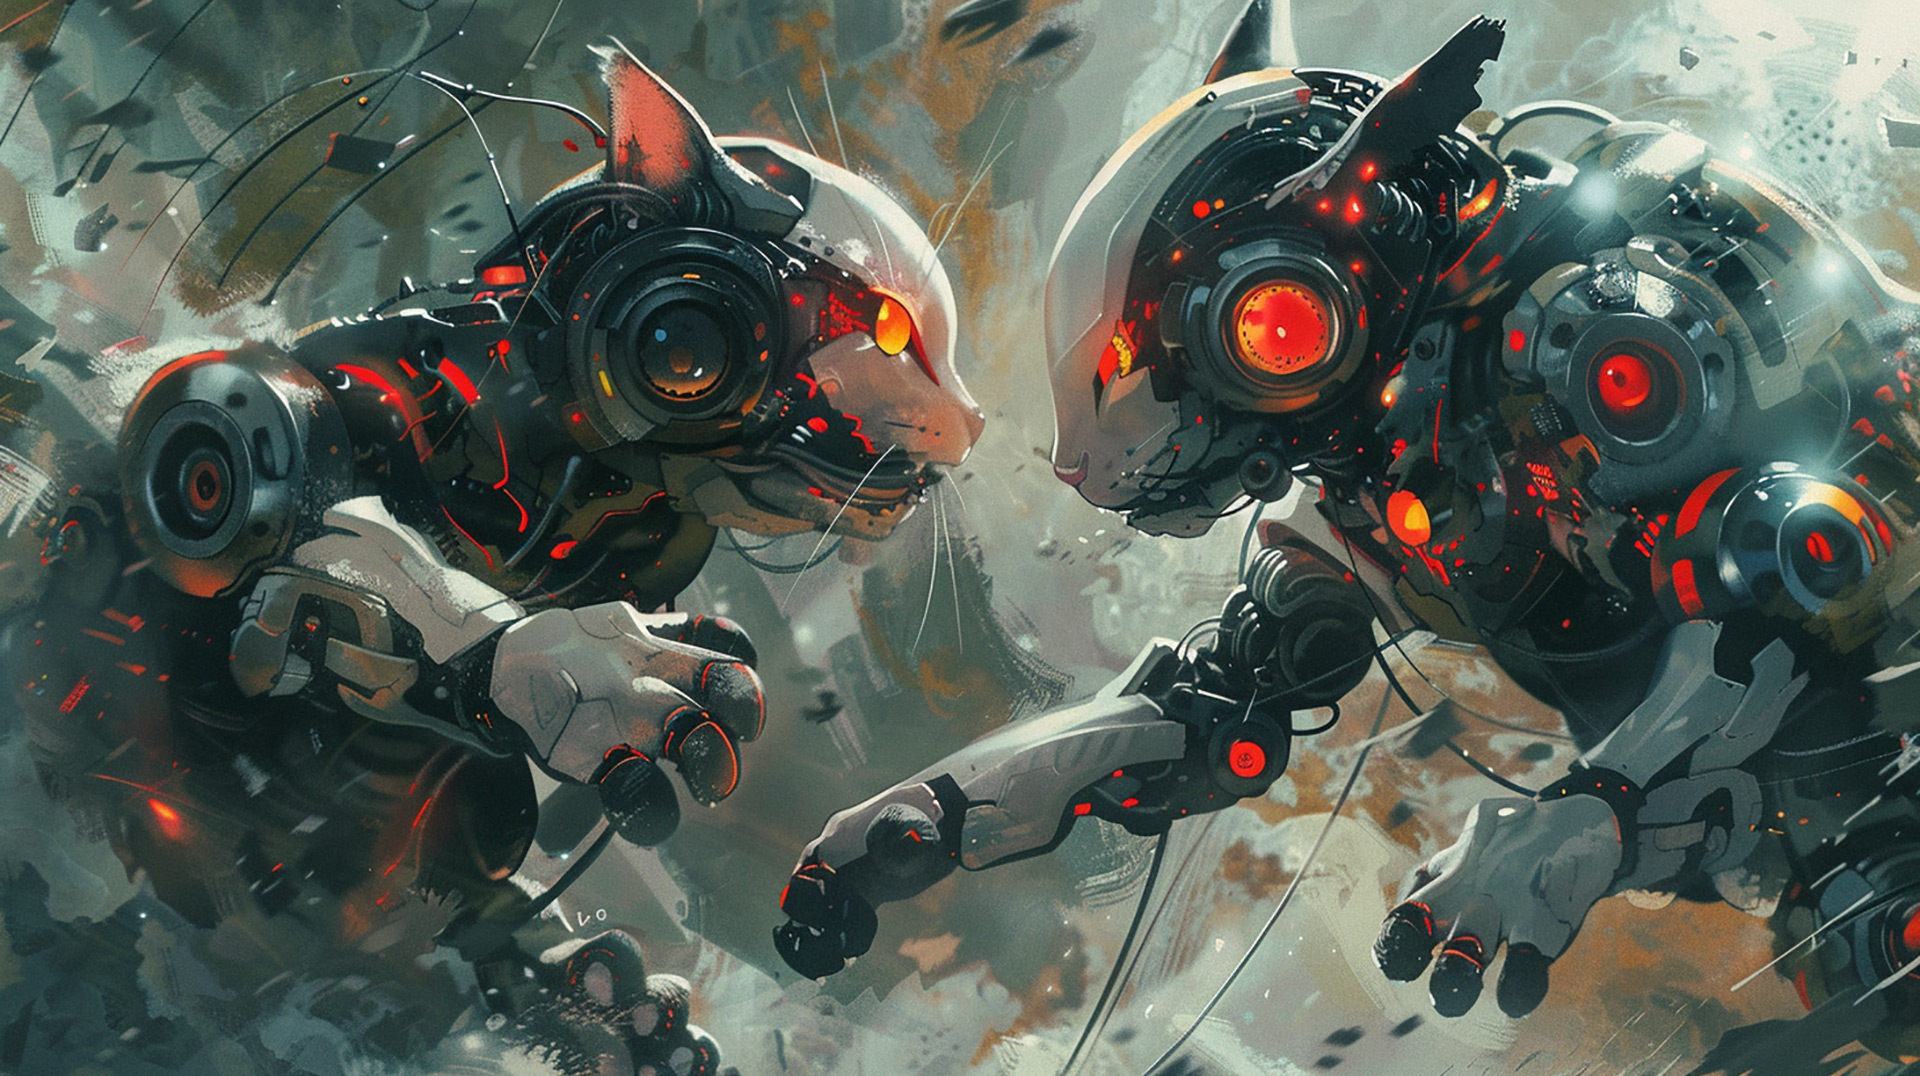 Free Wallpapers: Intense Robot Cat Battles in 8K